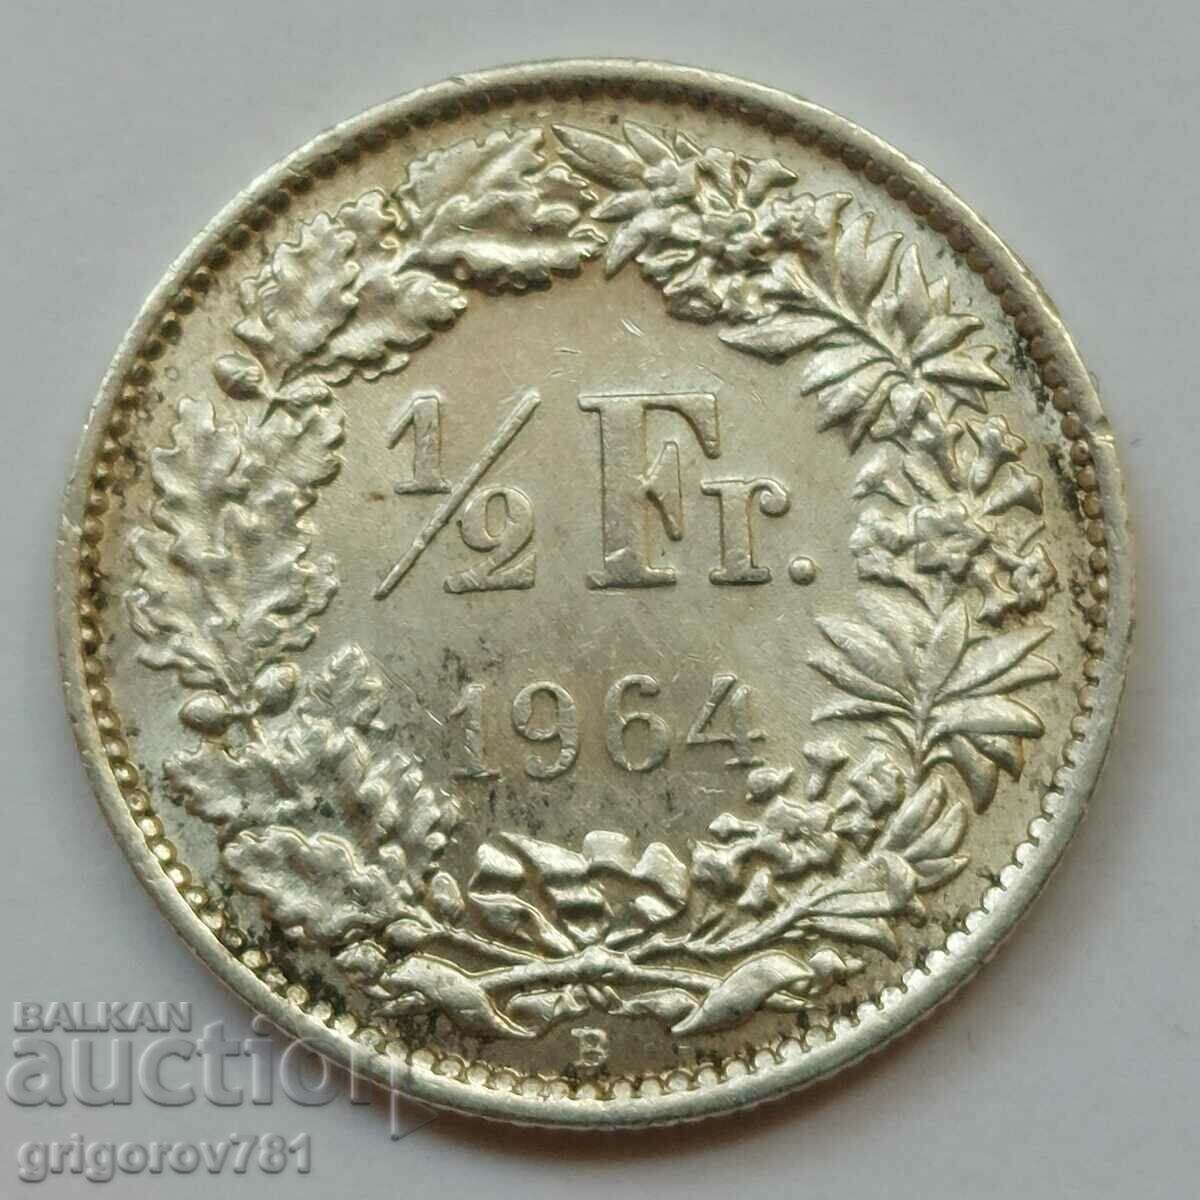 1/2 franc silver Switzerland 1964 B - silver coin